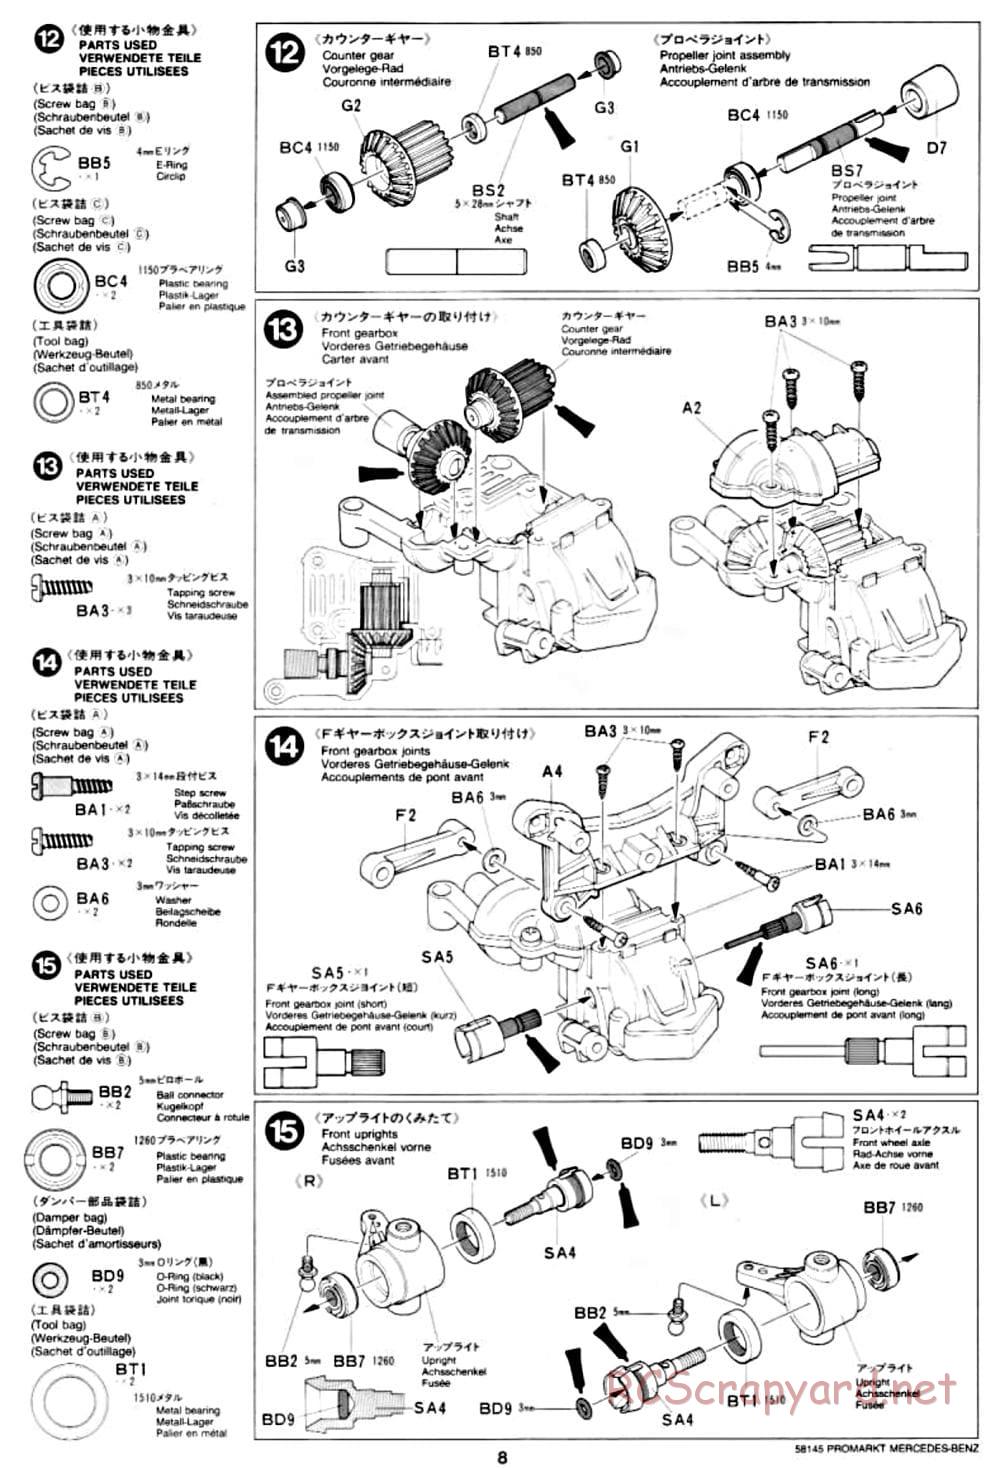 Tamiya - ProMarkt-Zakspeed AMG Mercedes C-Class DTM - TA-02 Chassis - Manual - Page 8